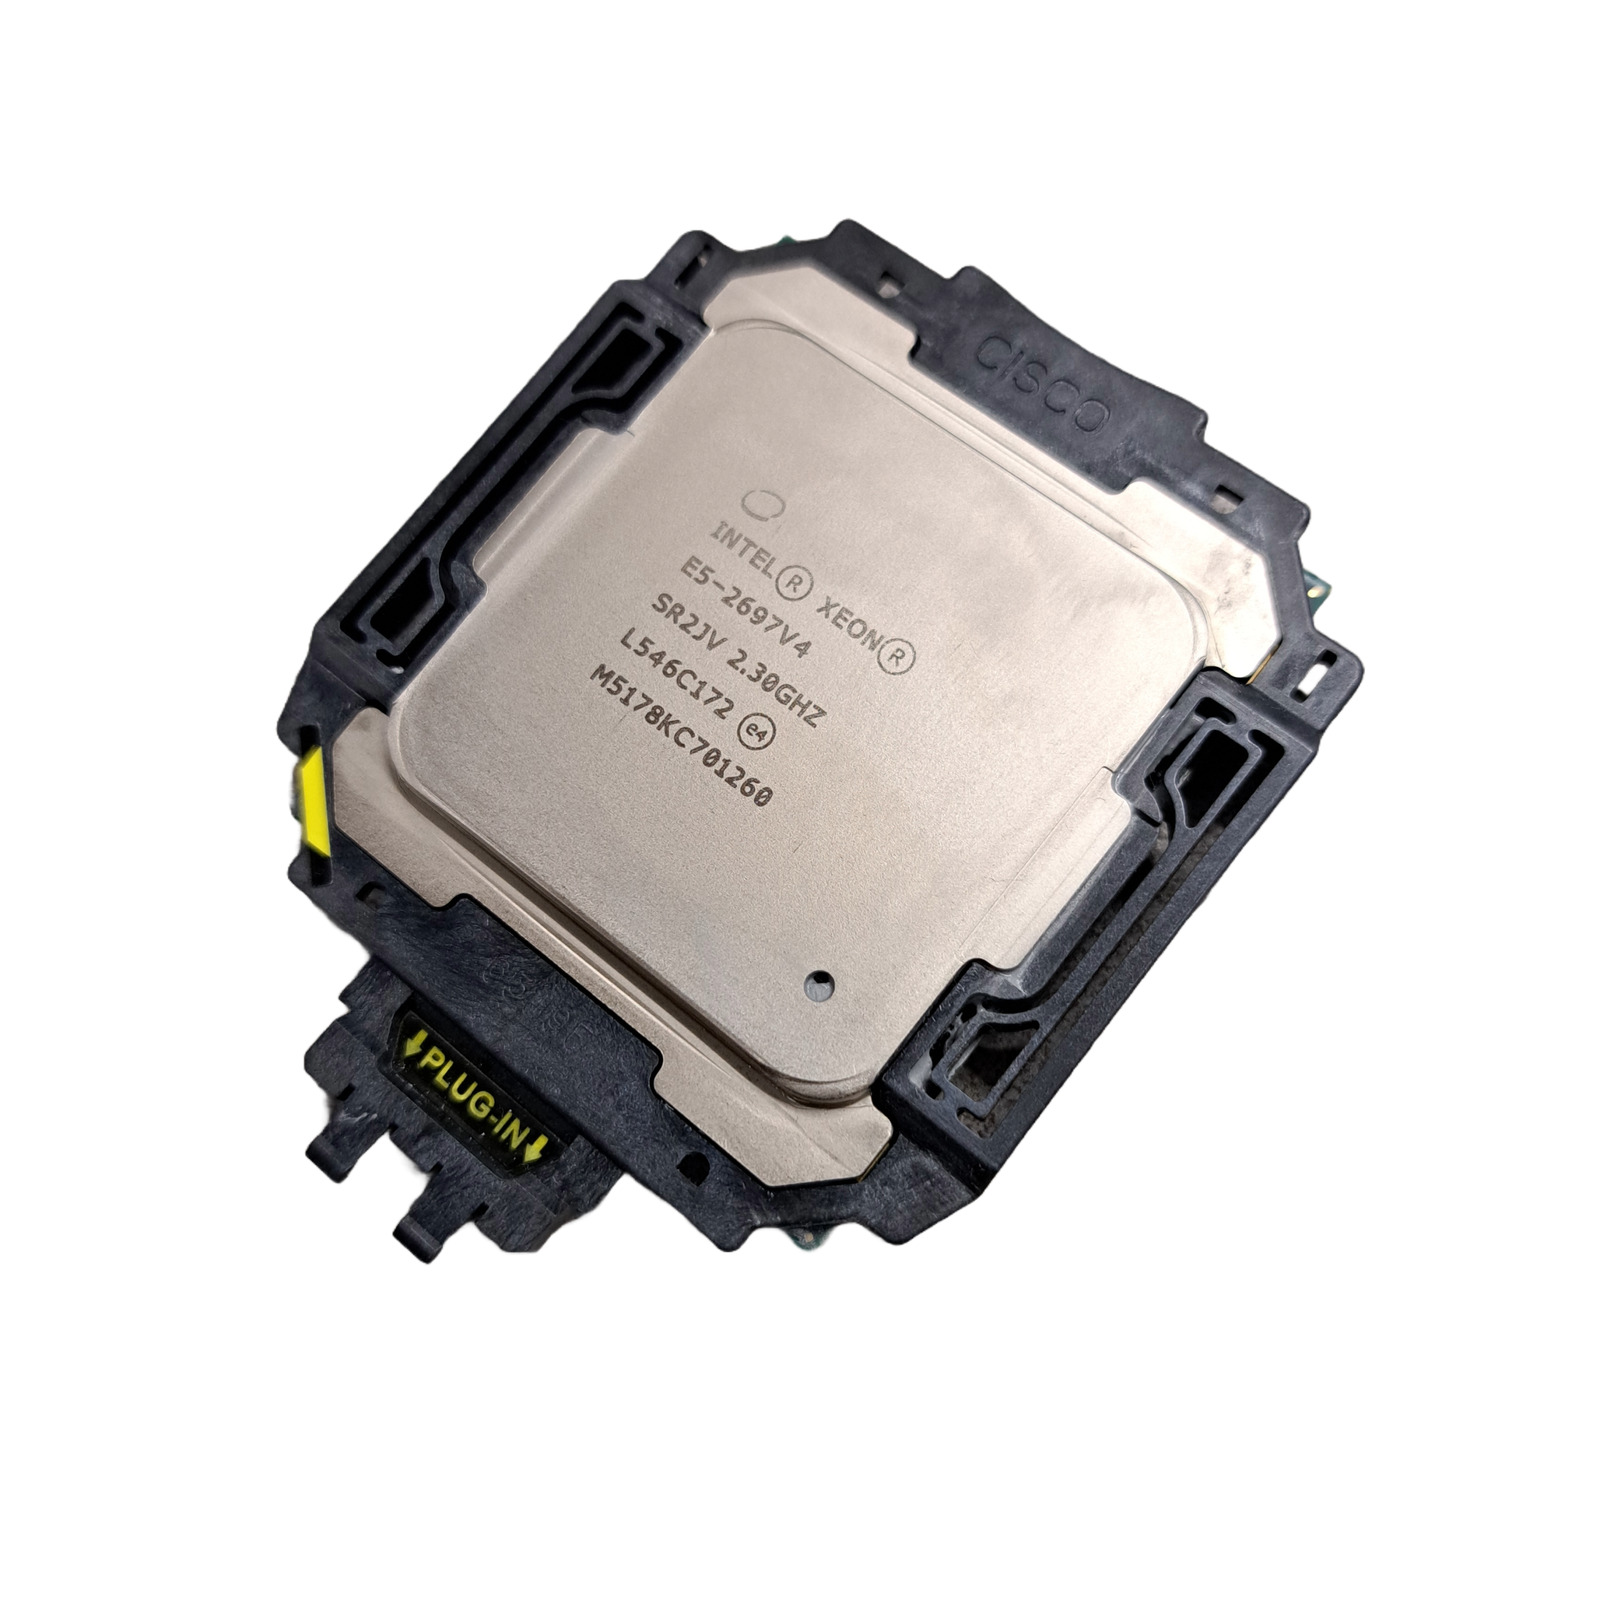 Intel Xeon E5-2697v4 18-Core 2.3/3.6GHz LGA2011-3 CPU SR2JV